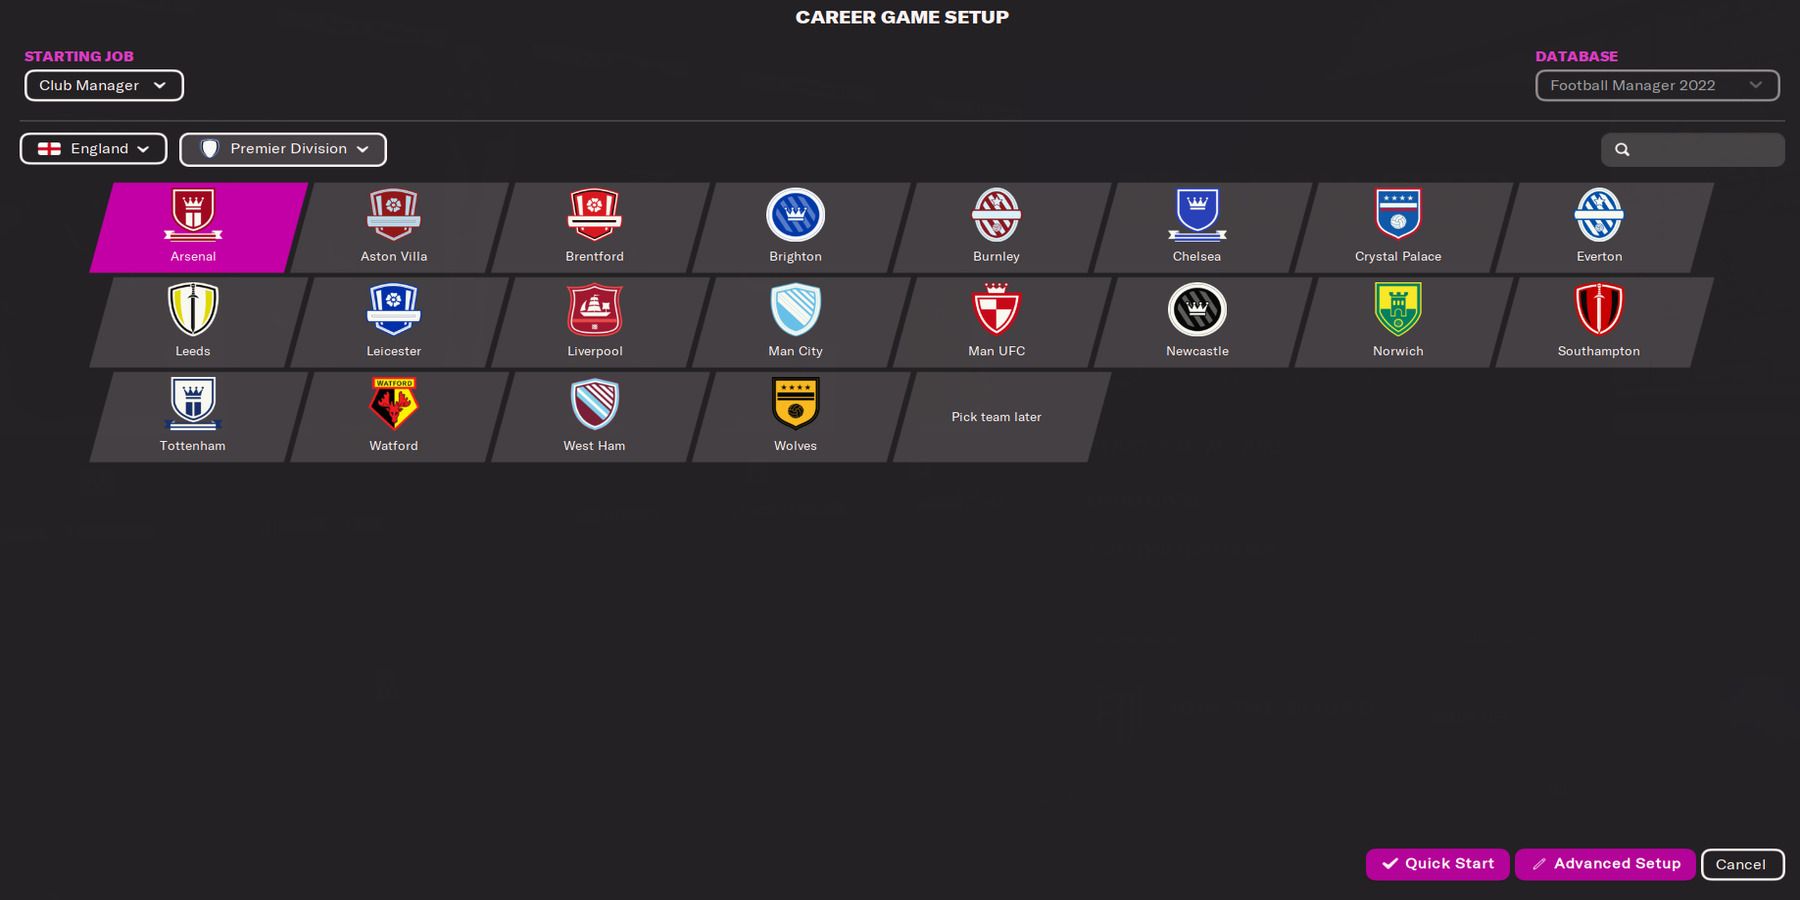 Career Game Setup with Arsenal highlighted